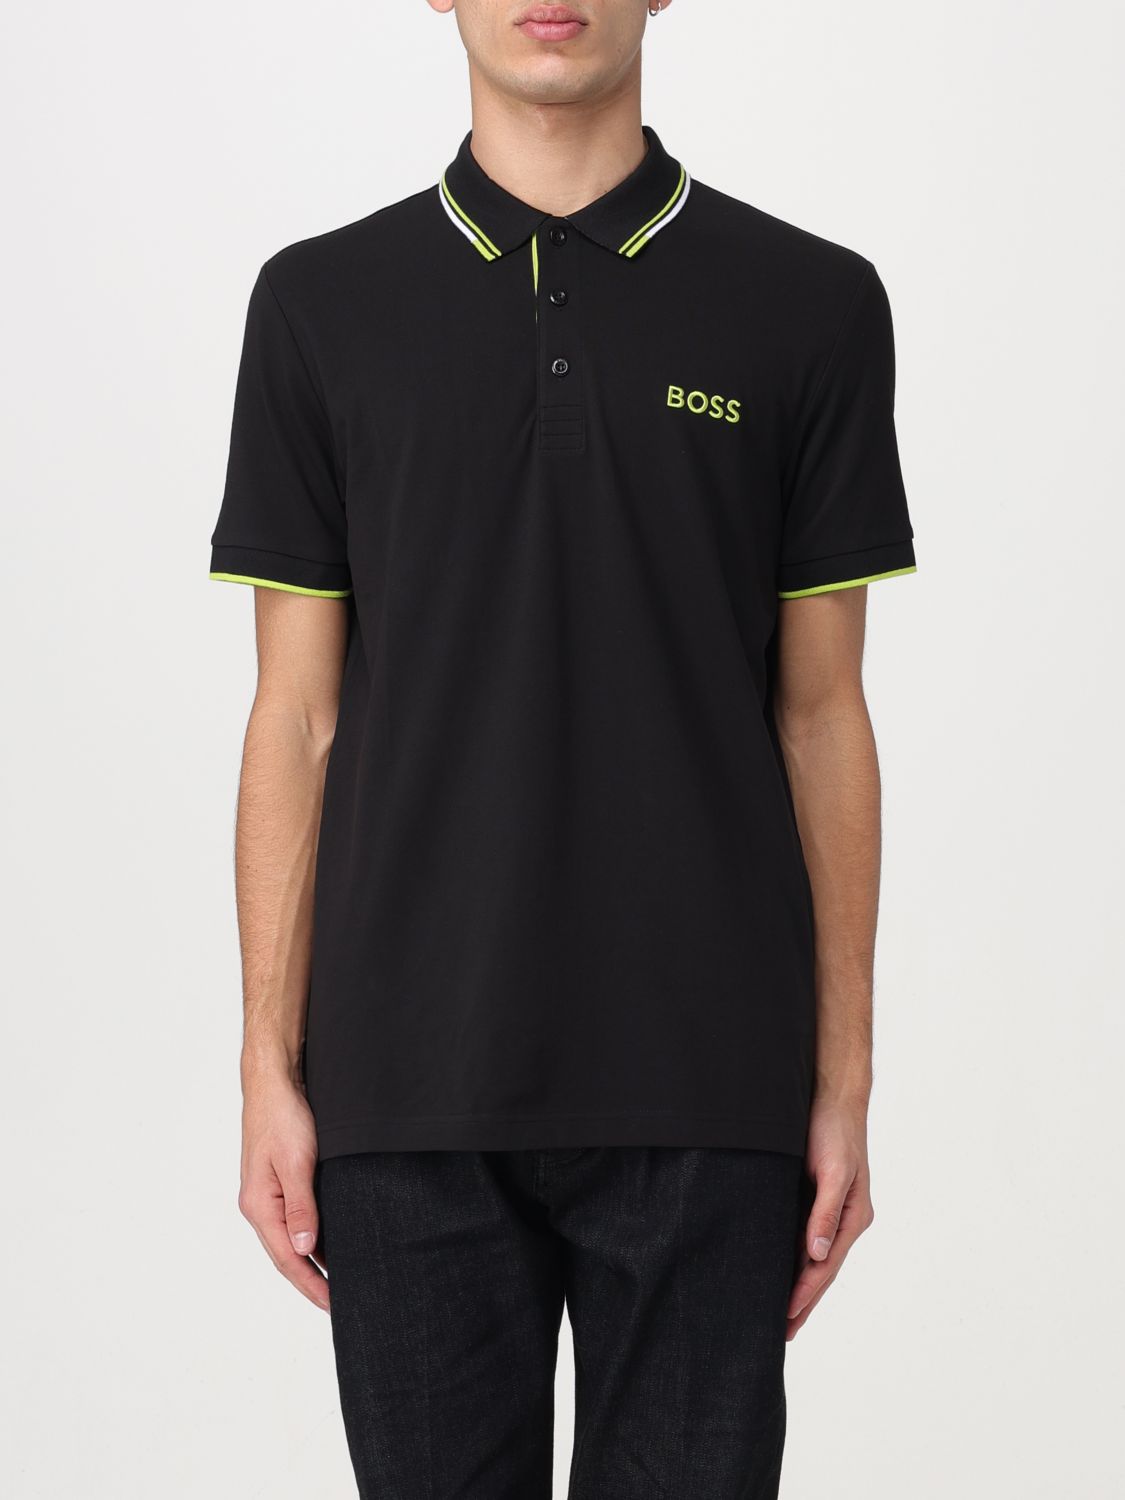 Hugo Boss Polo Shirt Boss Men Color Black